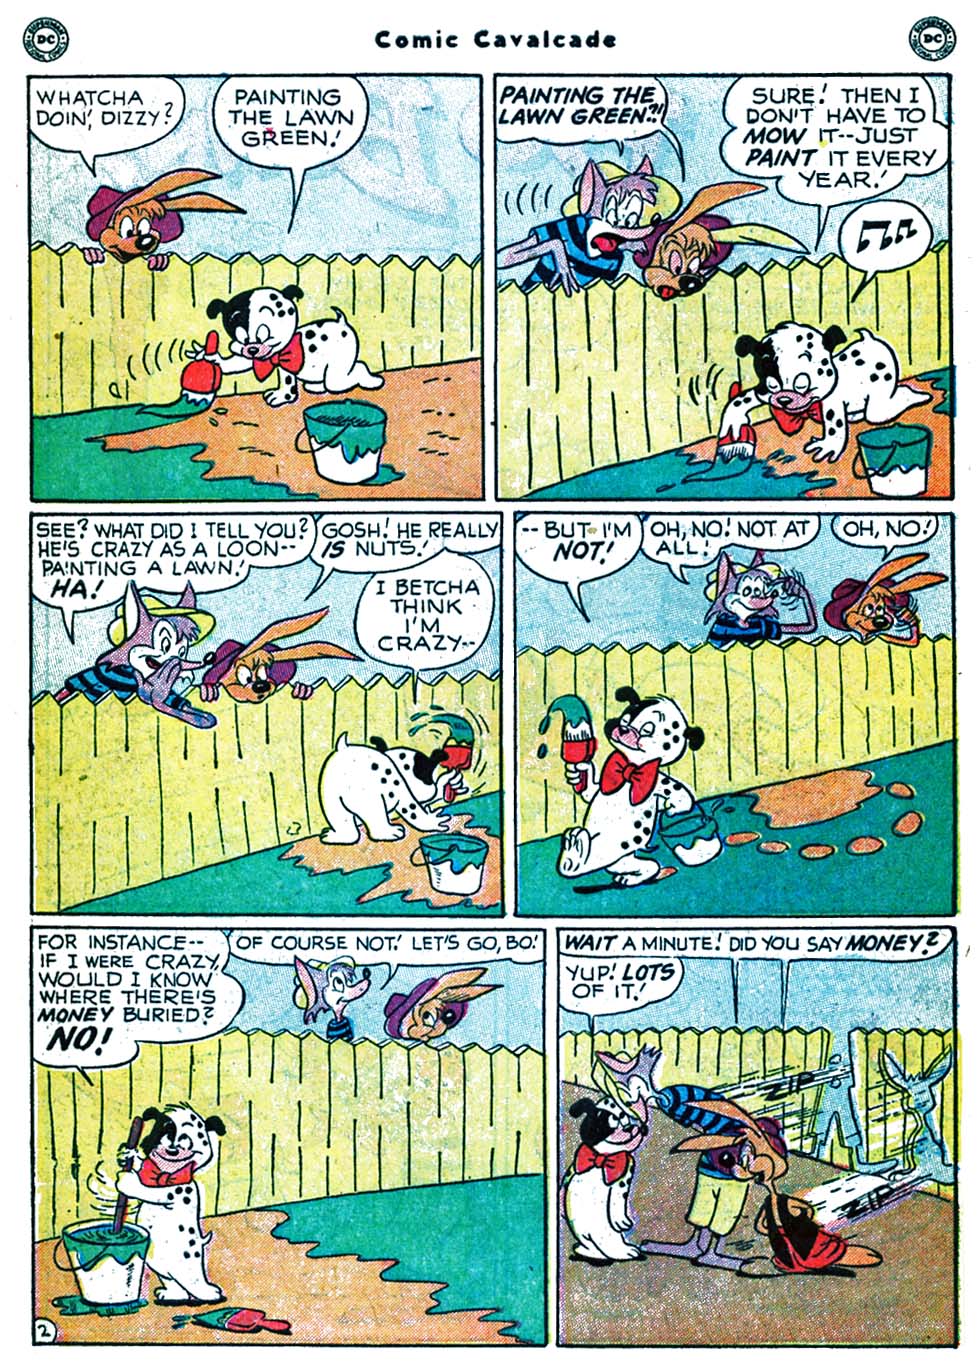 Comic Cavalcade issue 42 - Page 26